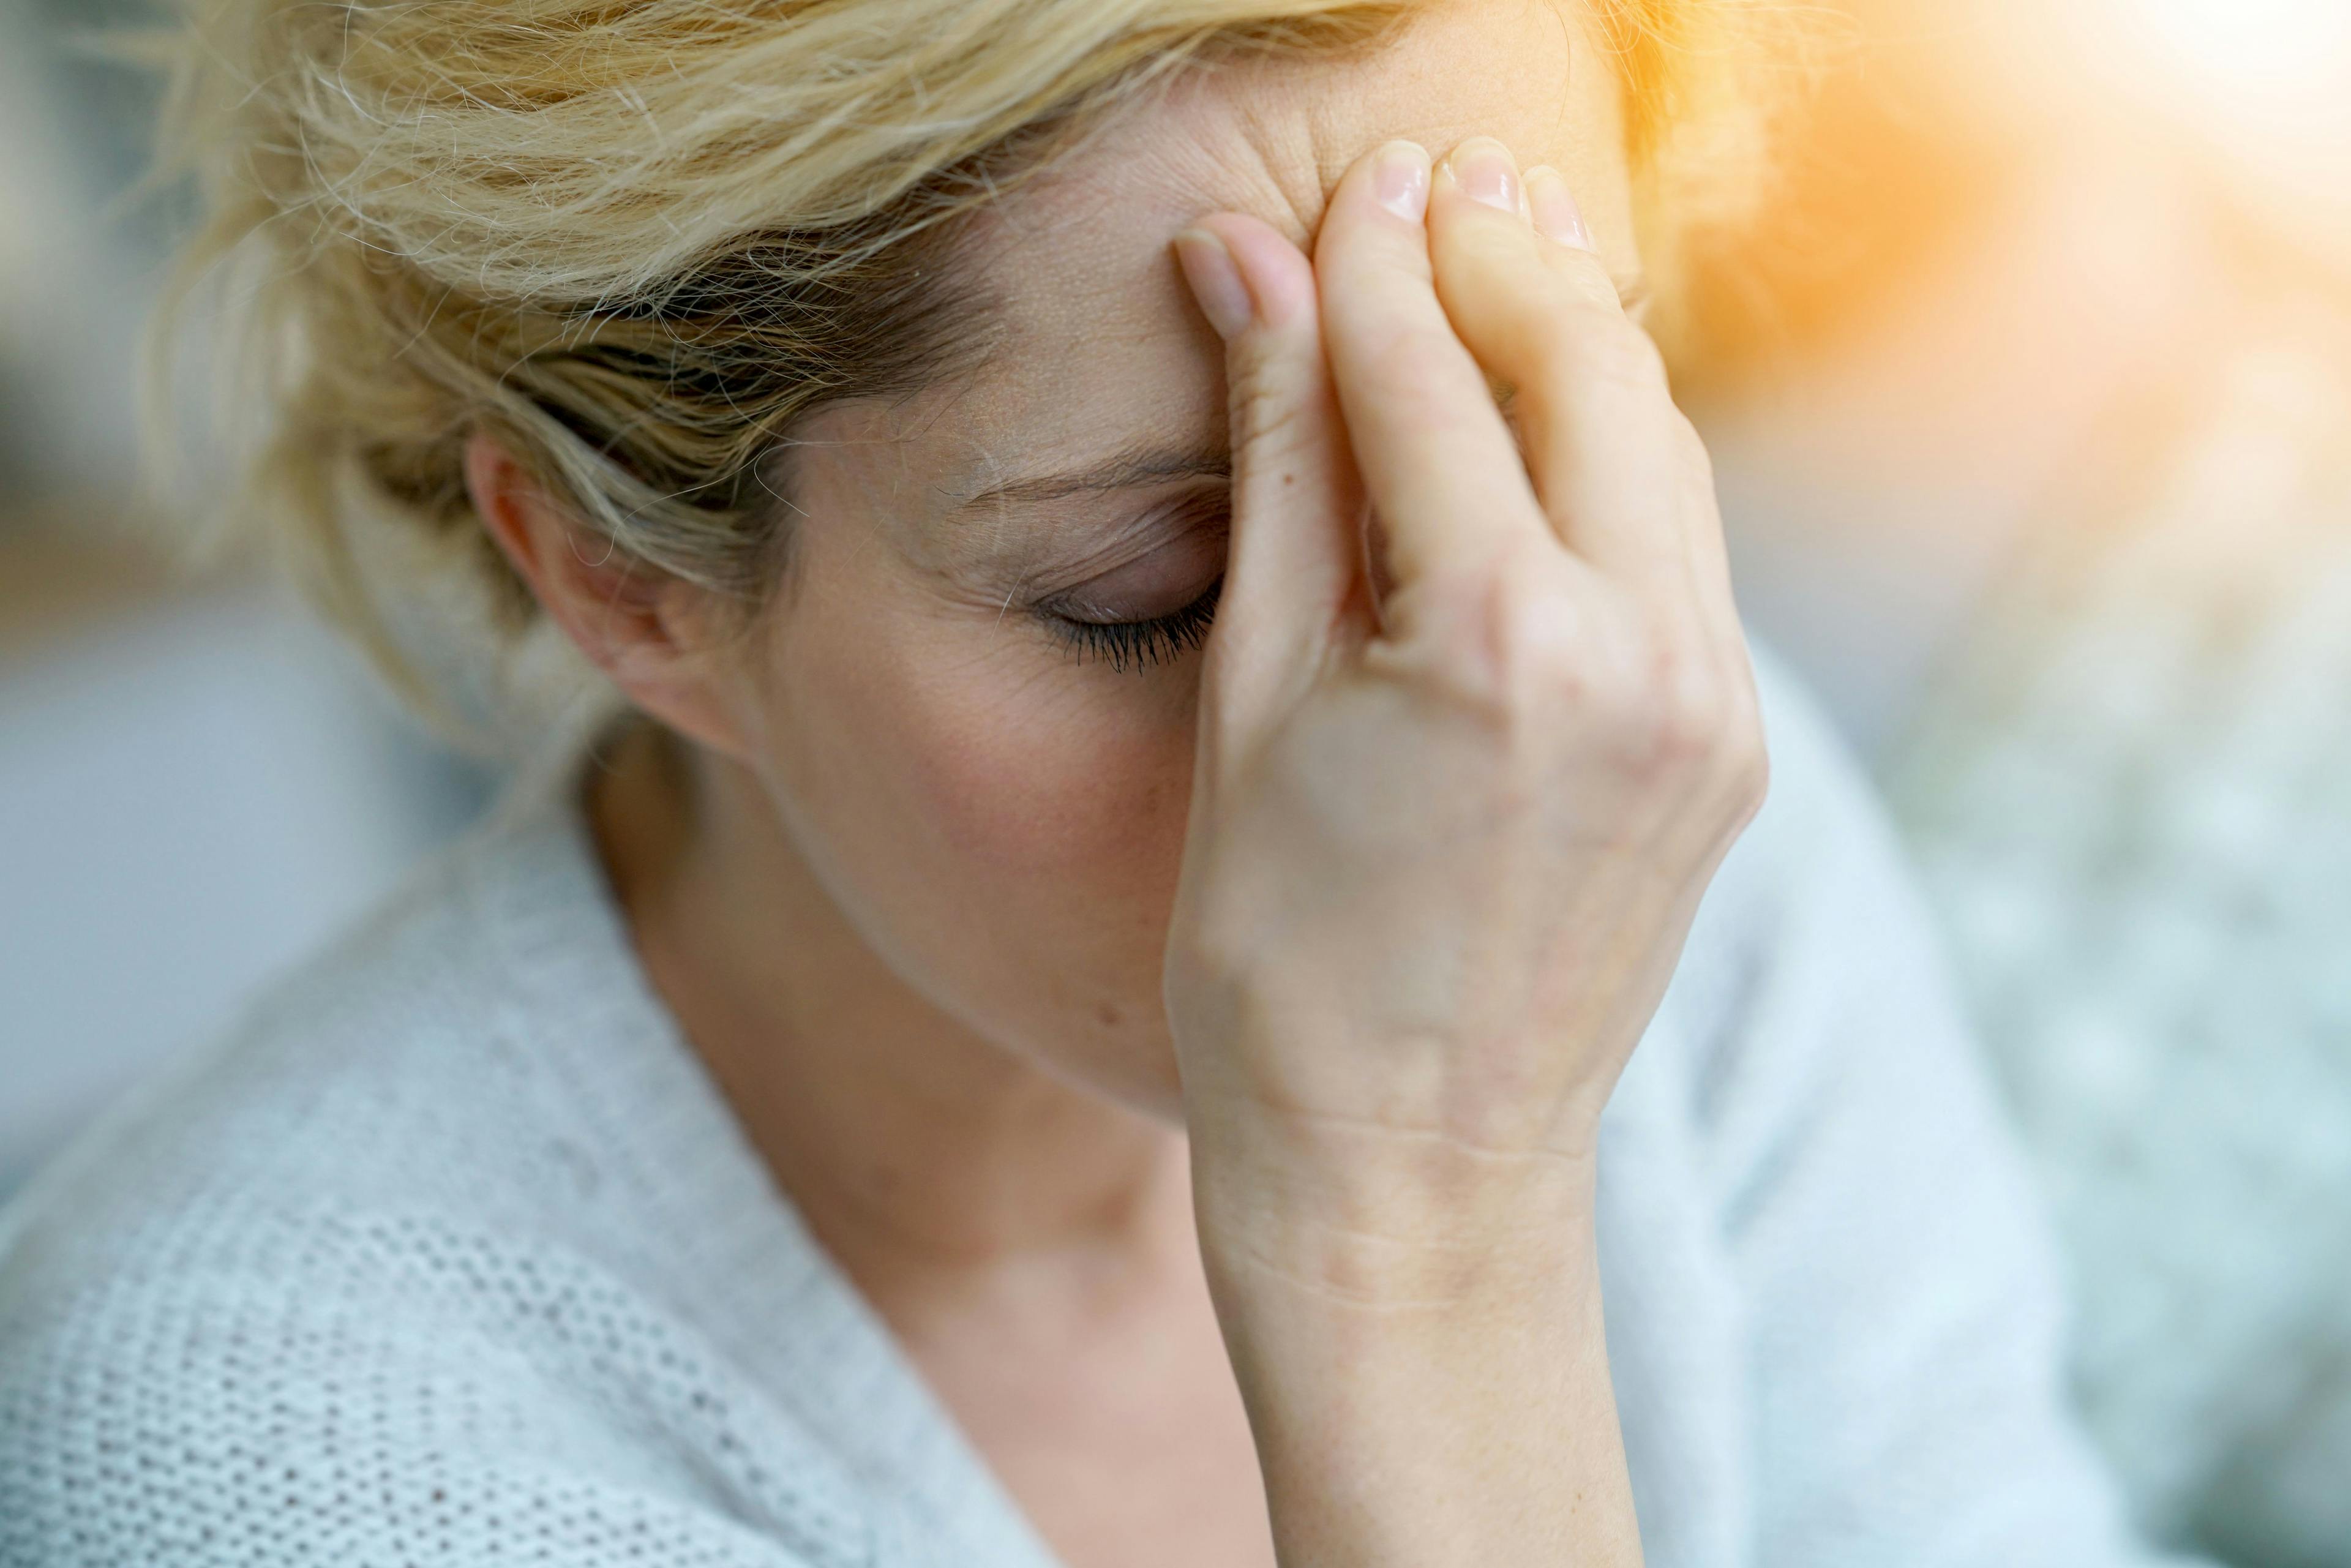 Portrait of middle-aged blond woman having a migraine | Image Credit: goodluz - stock.adobe.com